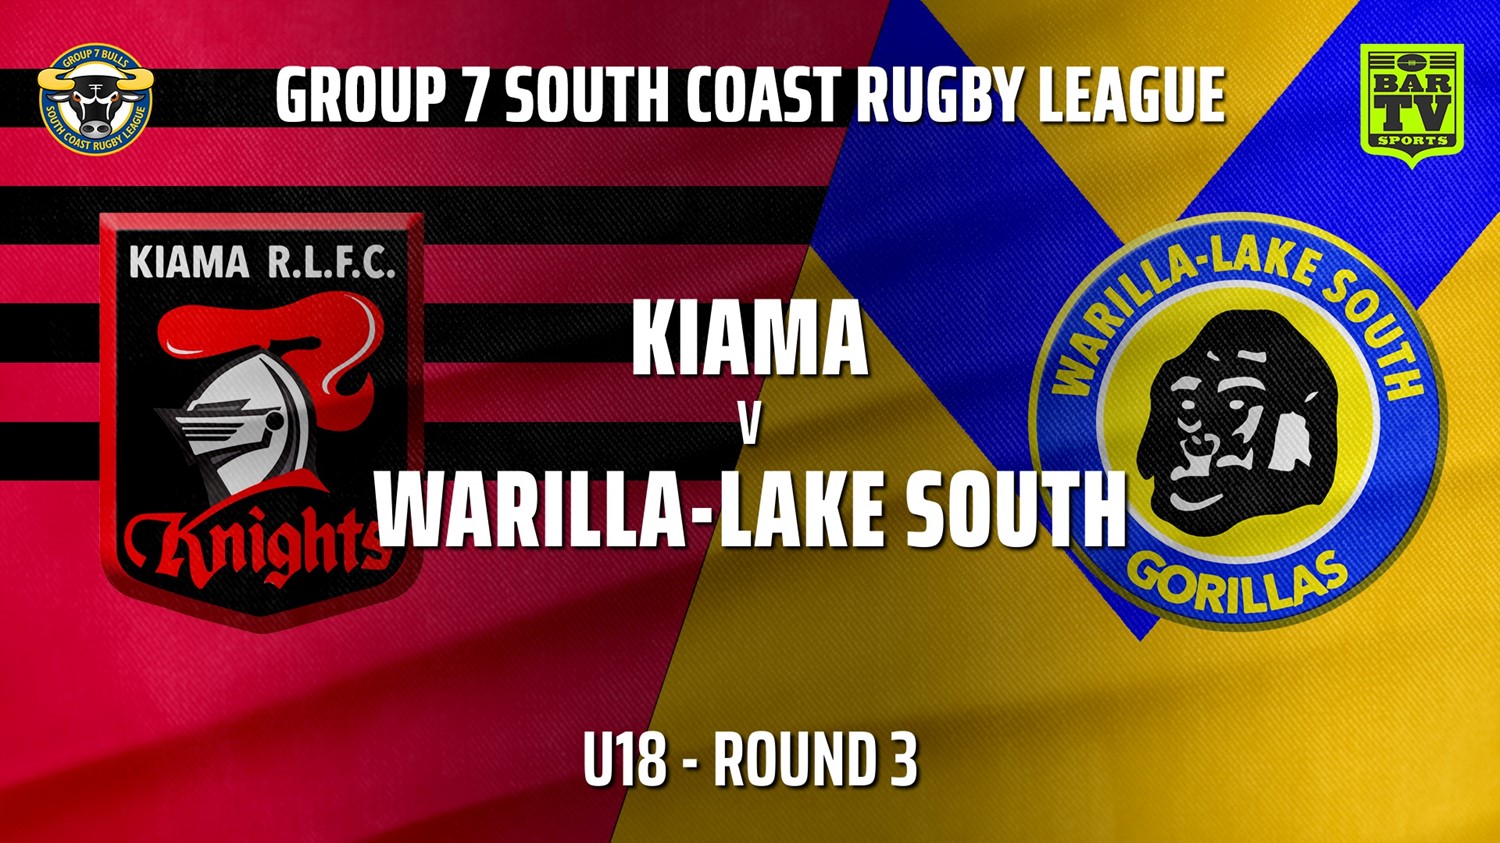 210502-Group 7 RL Round 3 - U18 - Kiama Knights v Warilla-Lake South Slate Image